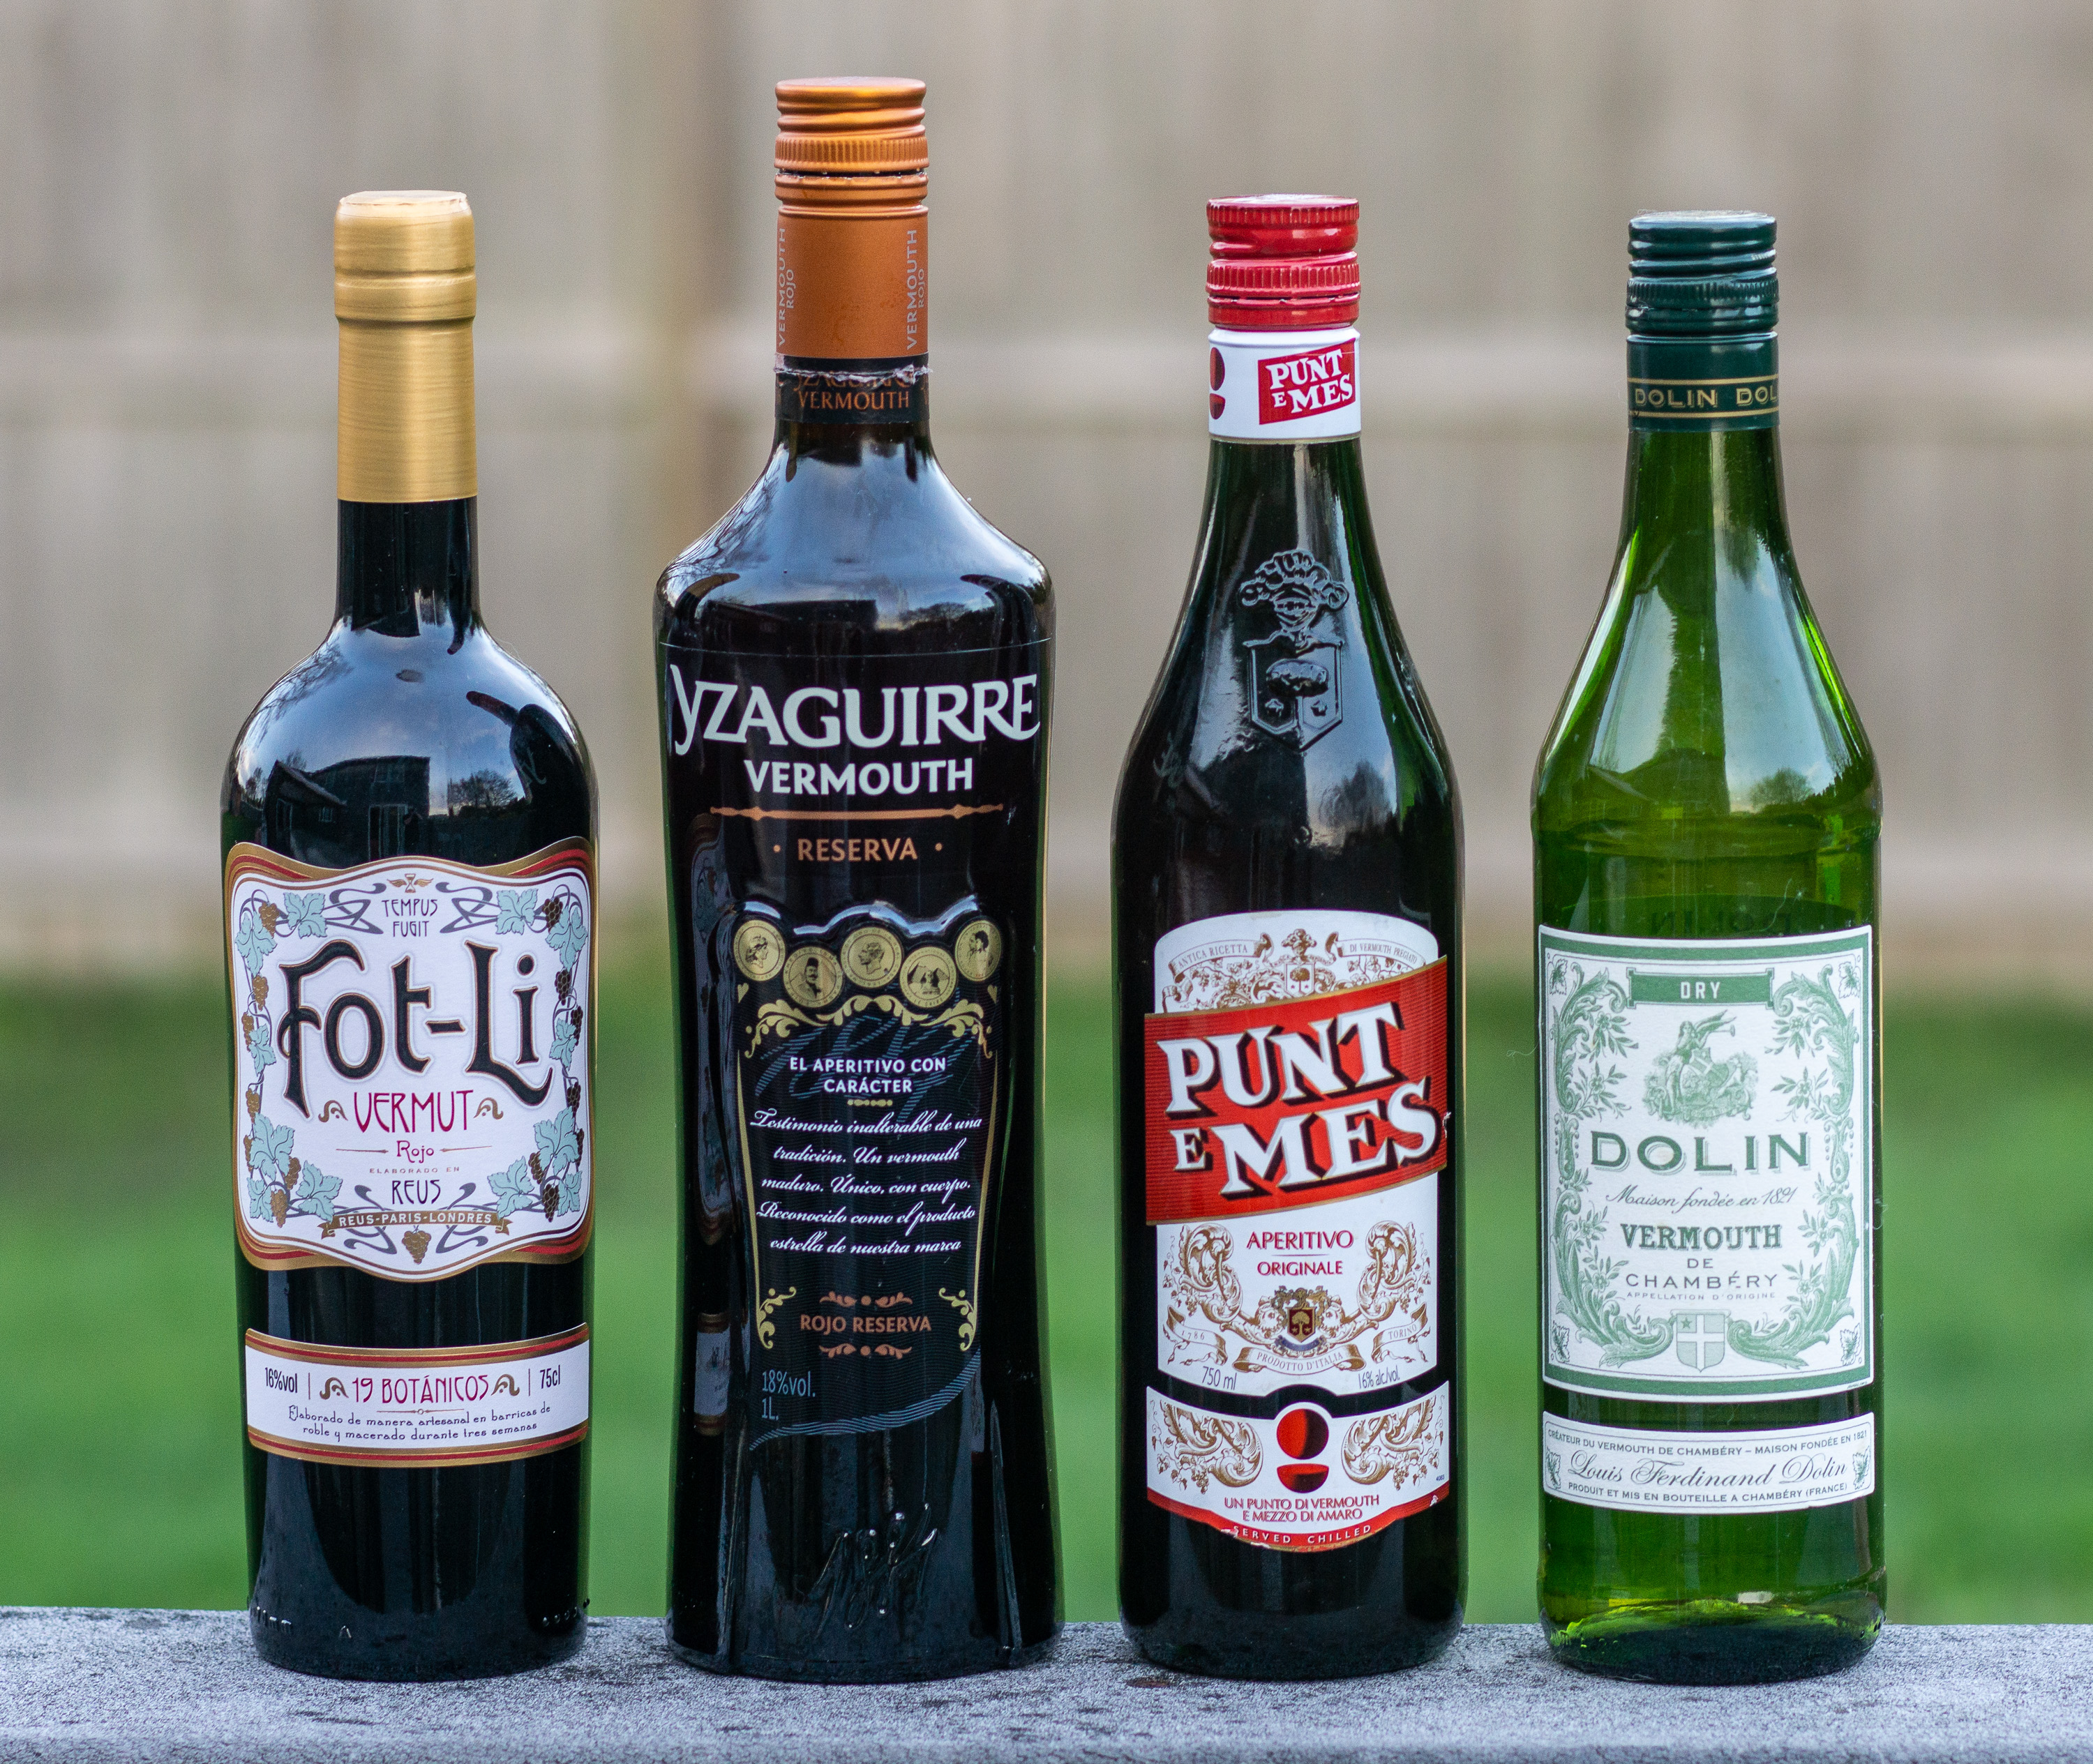 https://upload.wikimedia.org/wikipedia/commons/f/f3/Four_bottles_of_vermouth.jpg